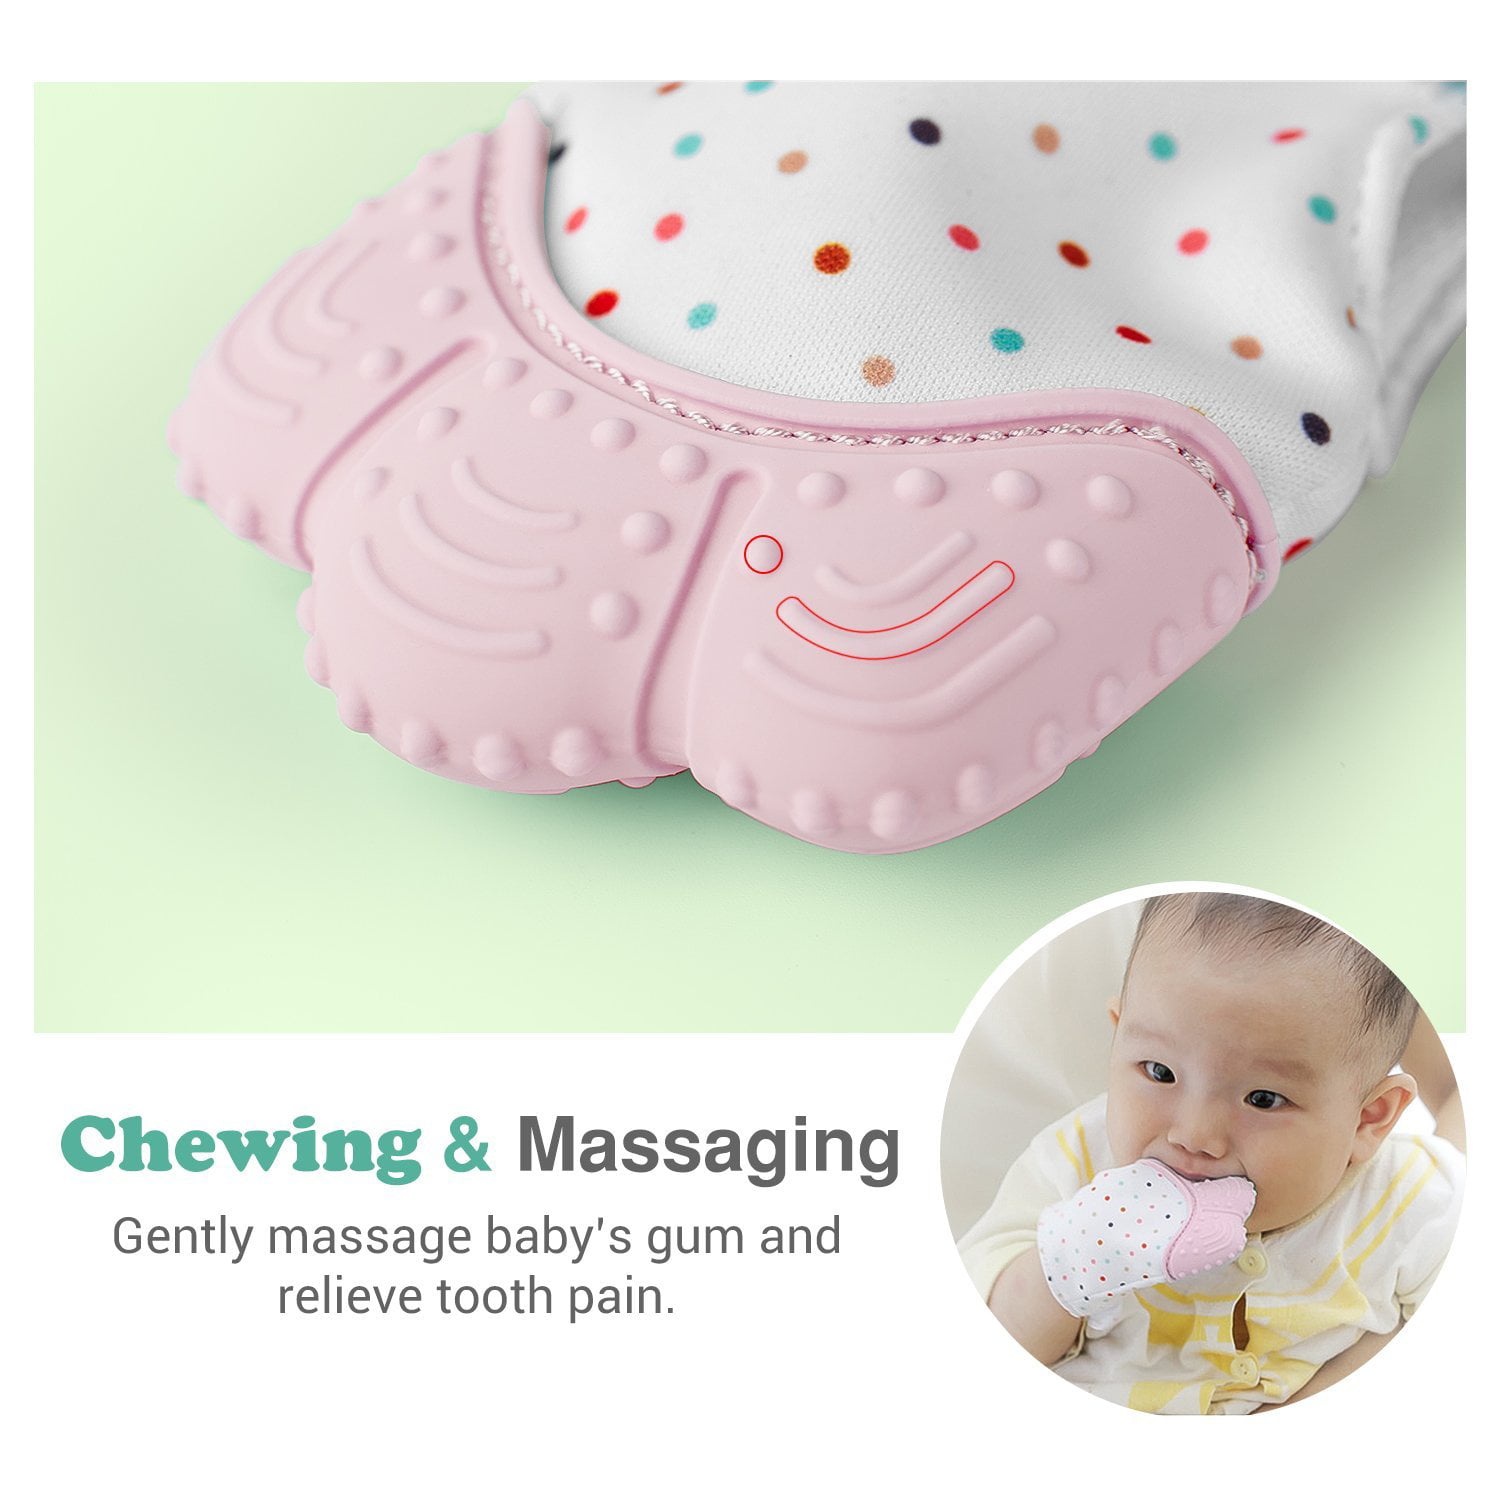 Safe 2 PACK Baby Teething Mitten BPA Free Mocaca Teething Mitten for Babies Self-Soothing Pain Relief and Teething Glove Pink Washable Teething Mitt 